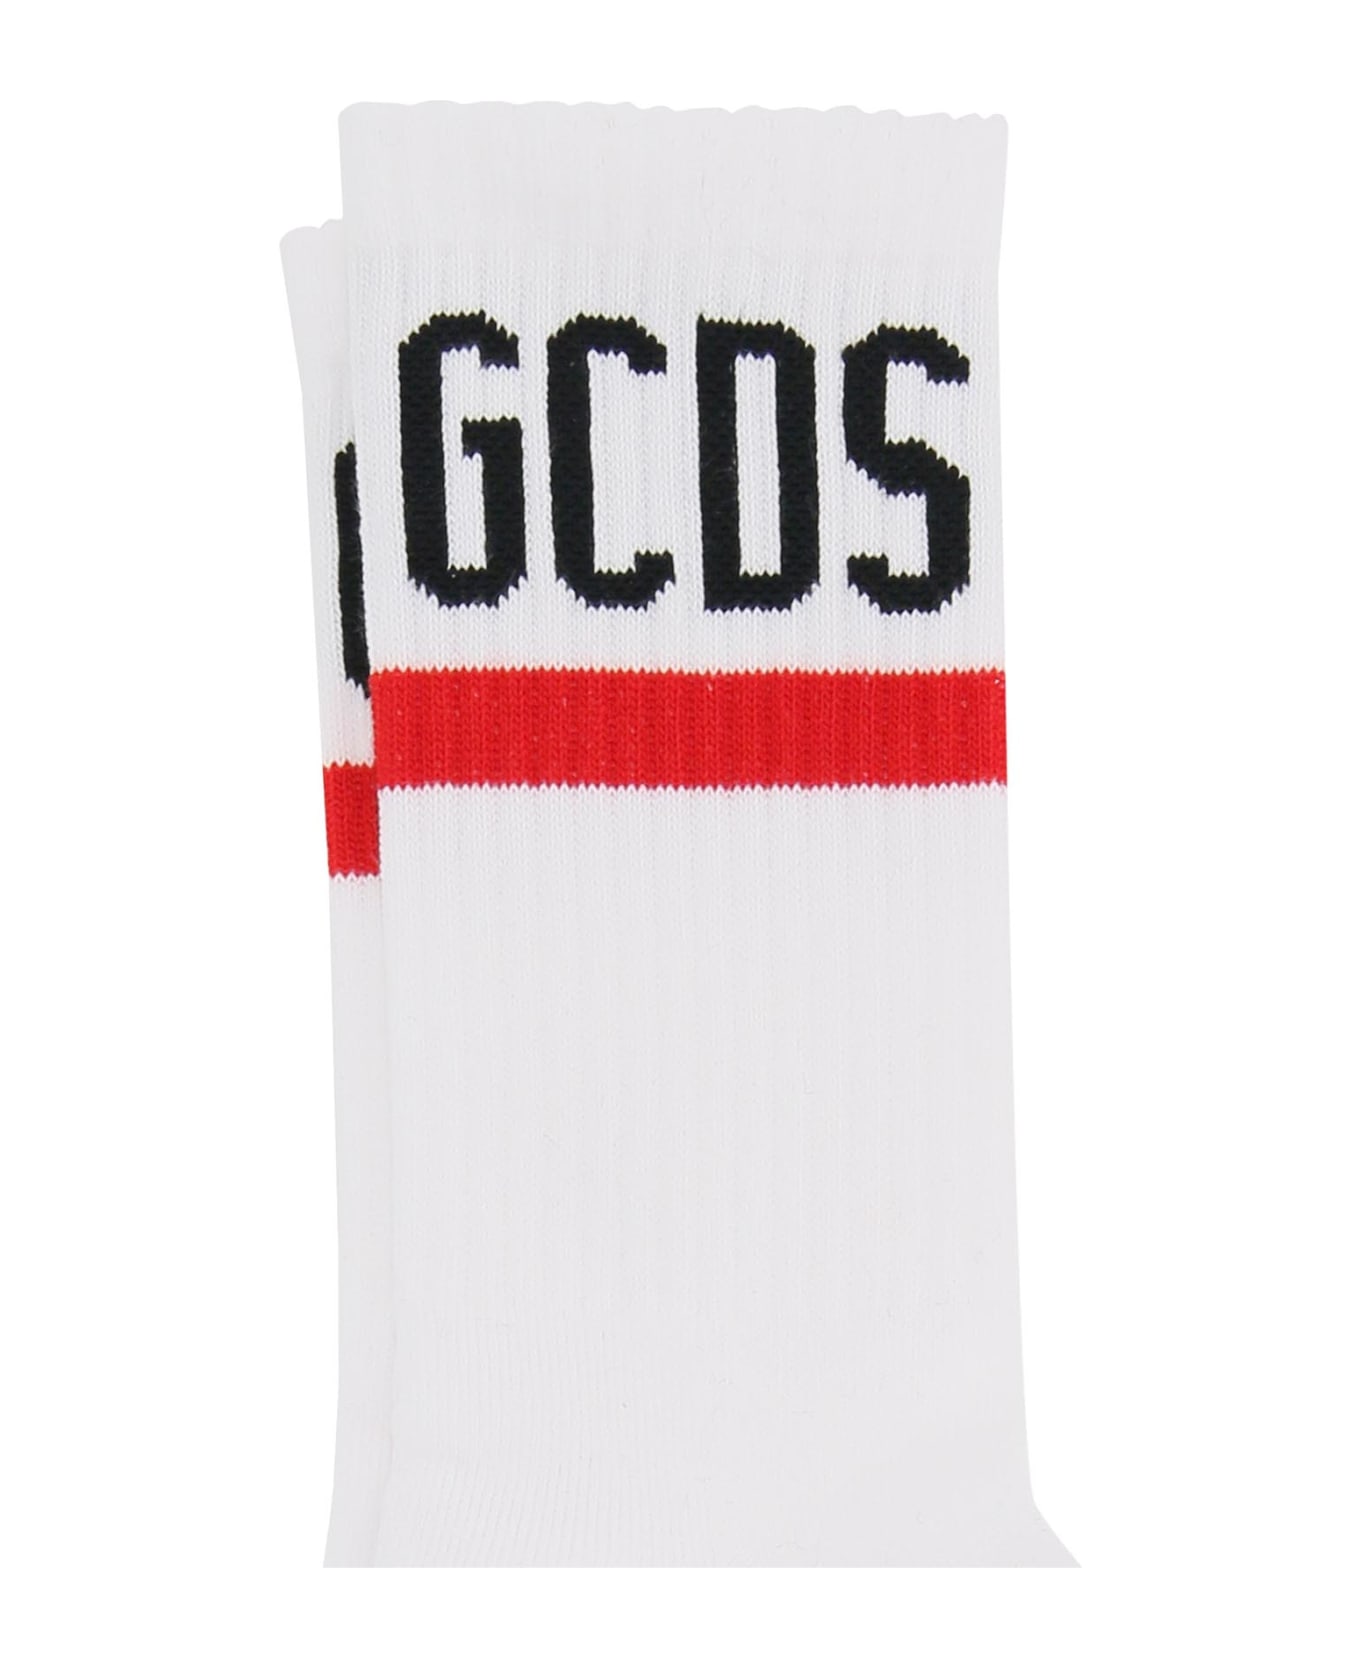 GCDS Sports Socks - White